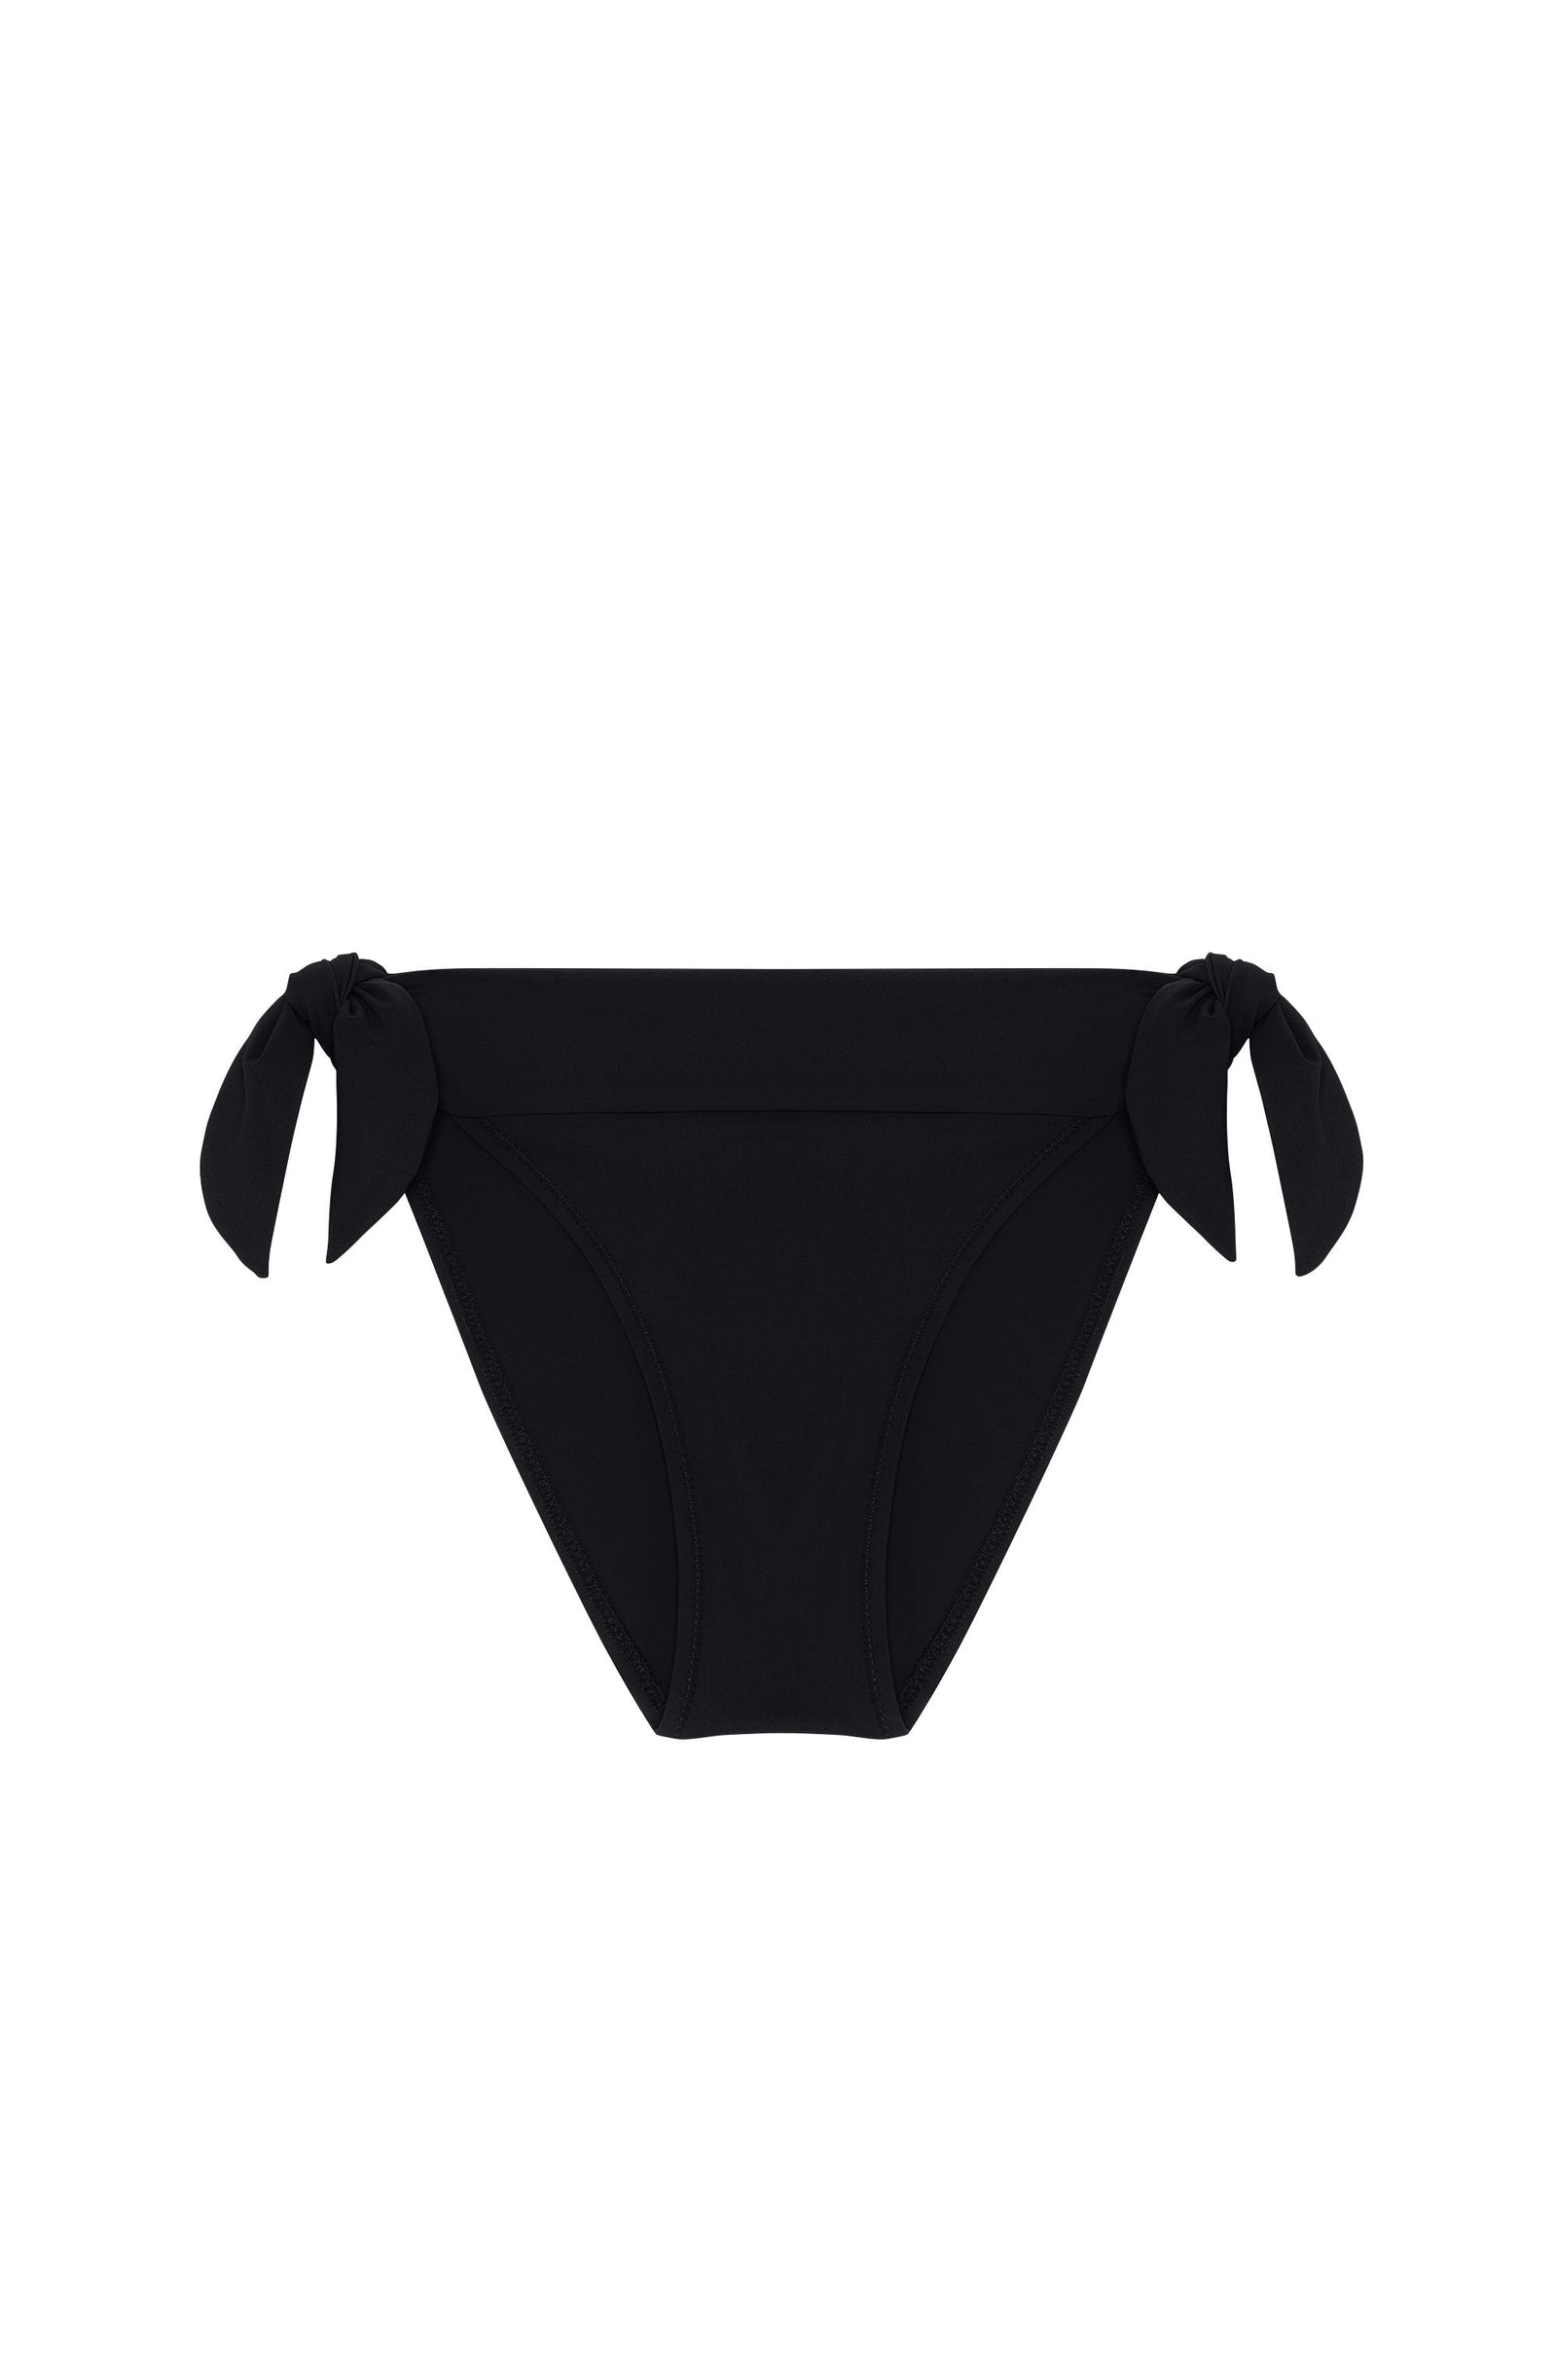 tyson - Black openwork bandeau bikini top - Pain de Sucre